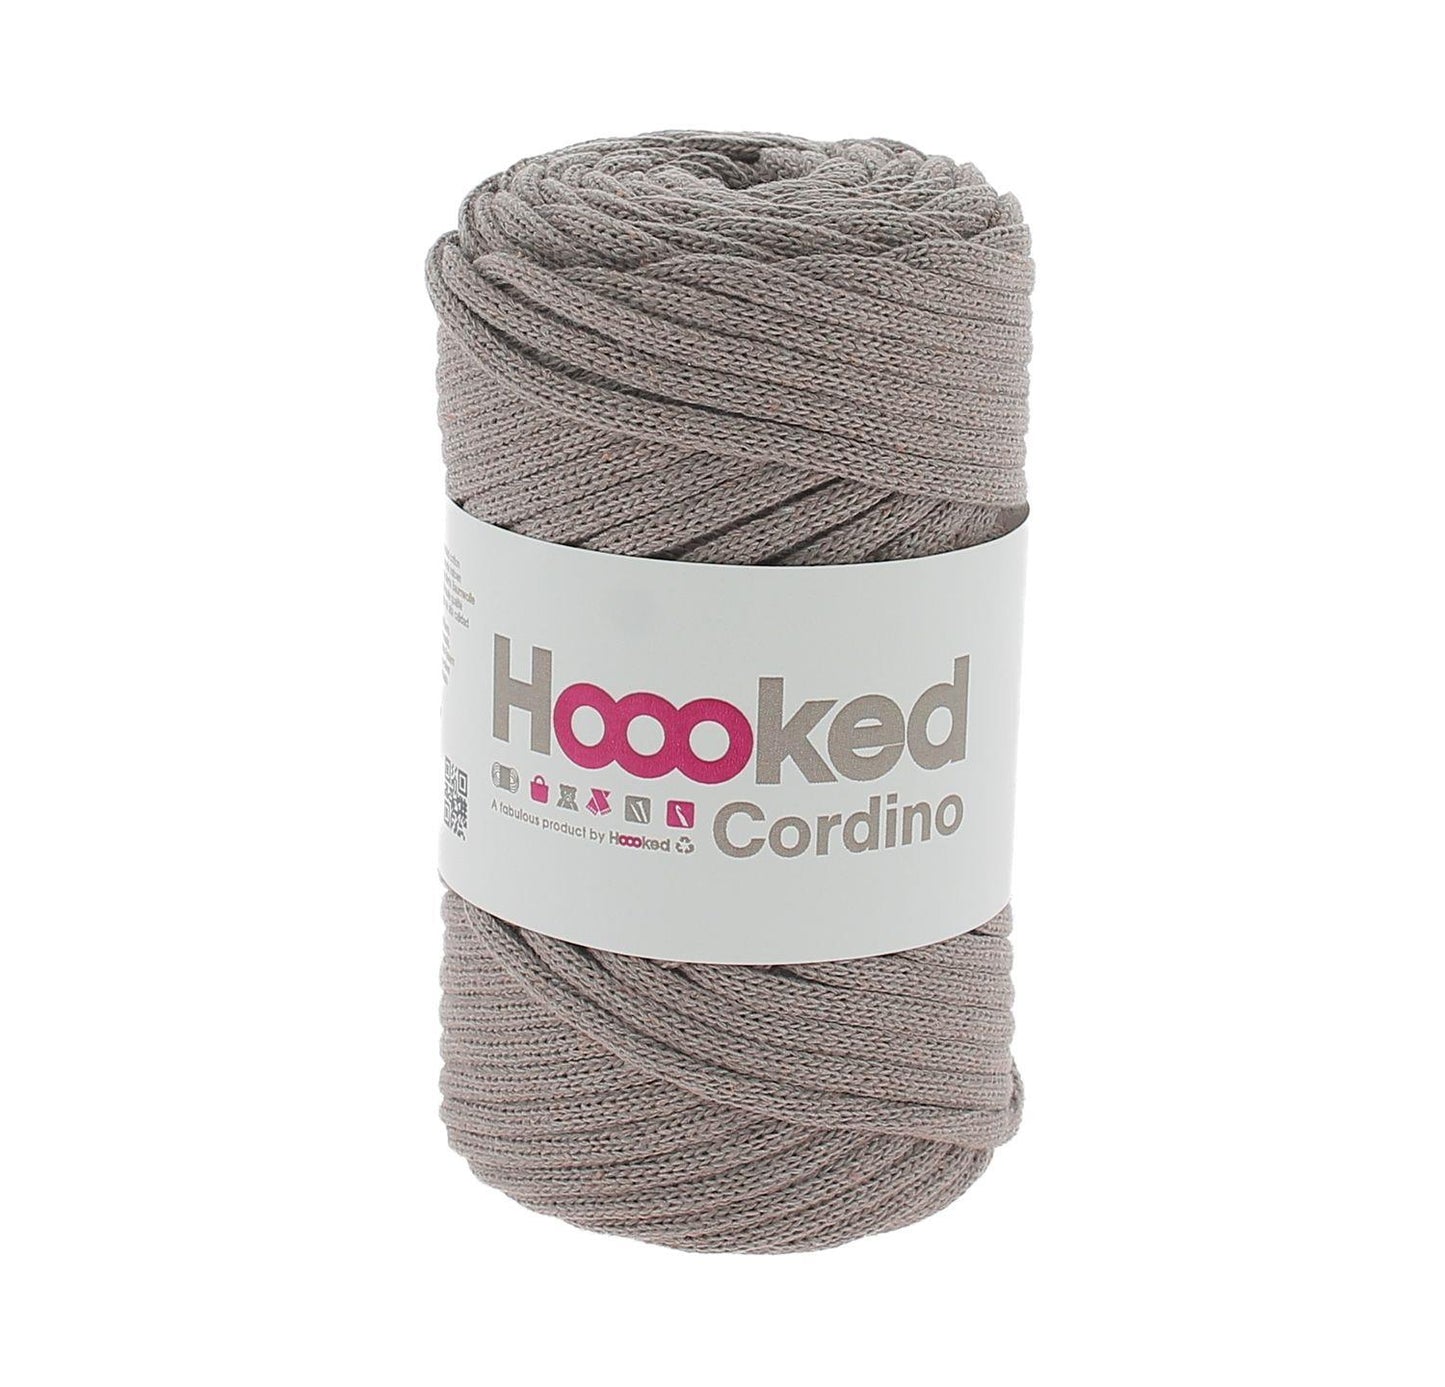 [Hoooked] Cordino Earth Taupe Cotton Macrame Cord - 54M, 150g